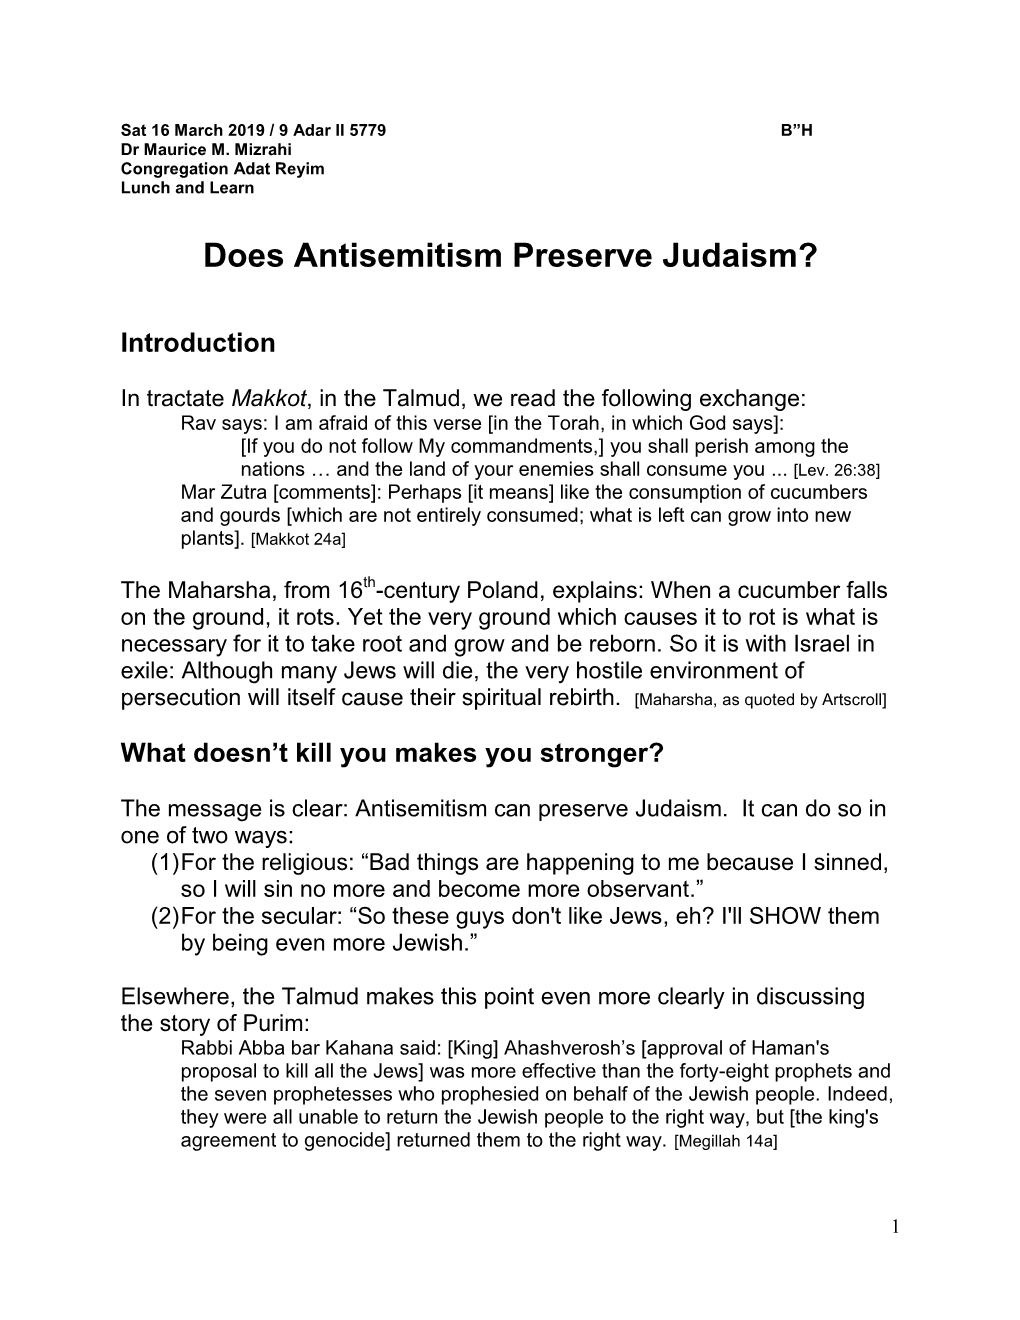 Does Antisemitism Preserve Judaism?